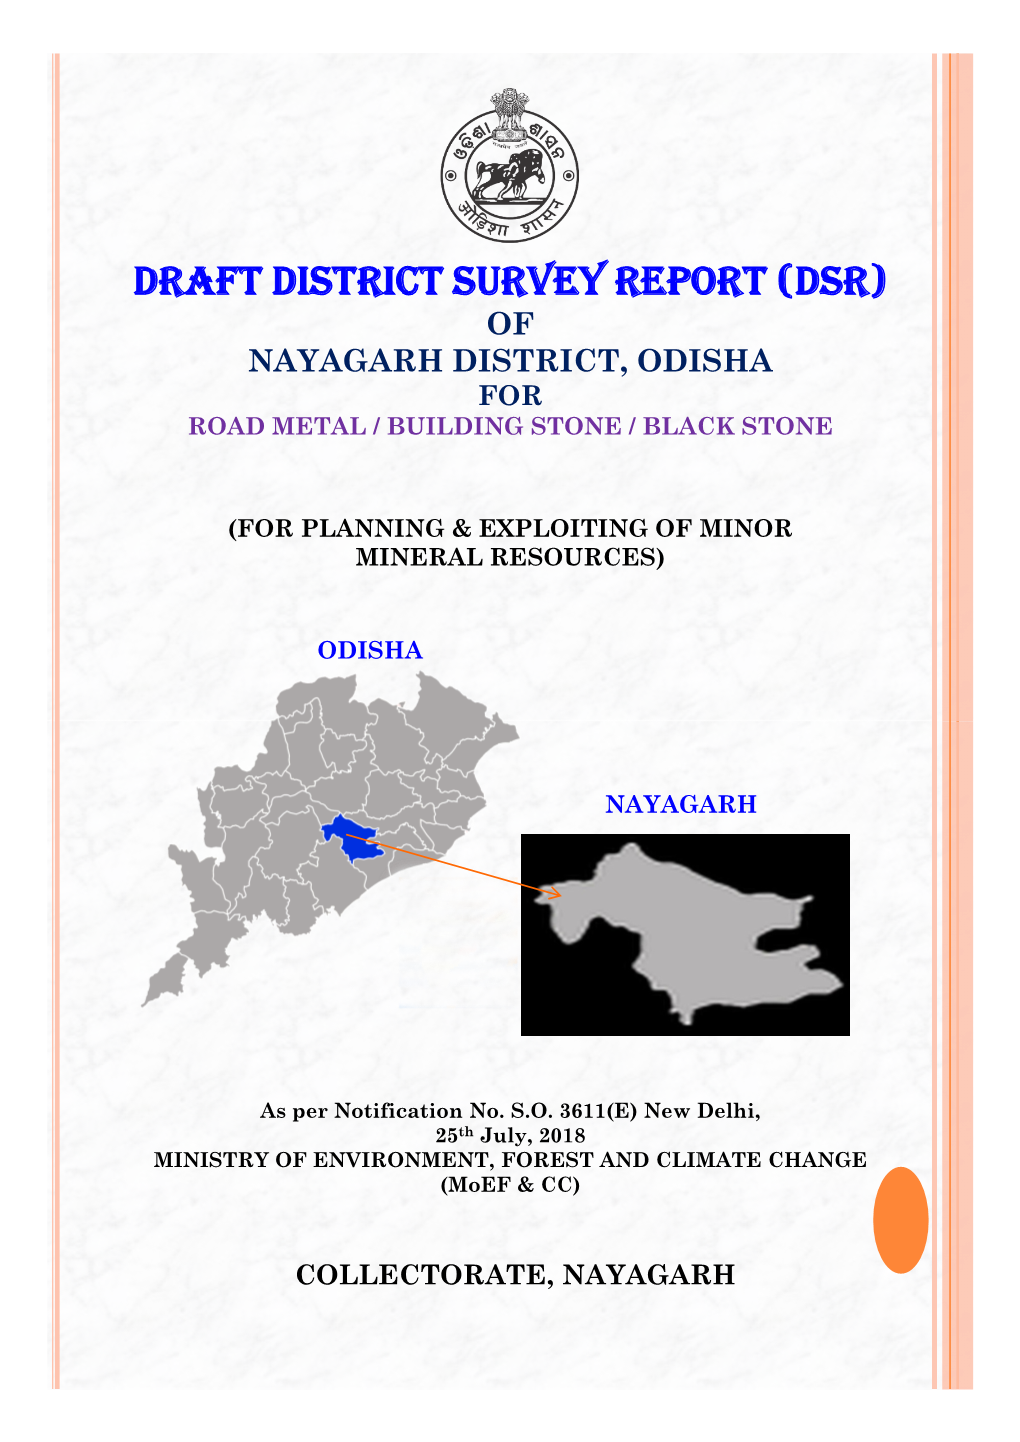 Draft District Survey Report (Dsr) of Nayagarh District, Odisha for Road Metal / Building Stone / Black Stone